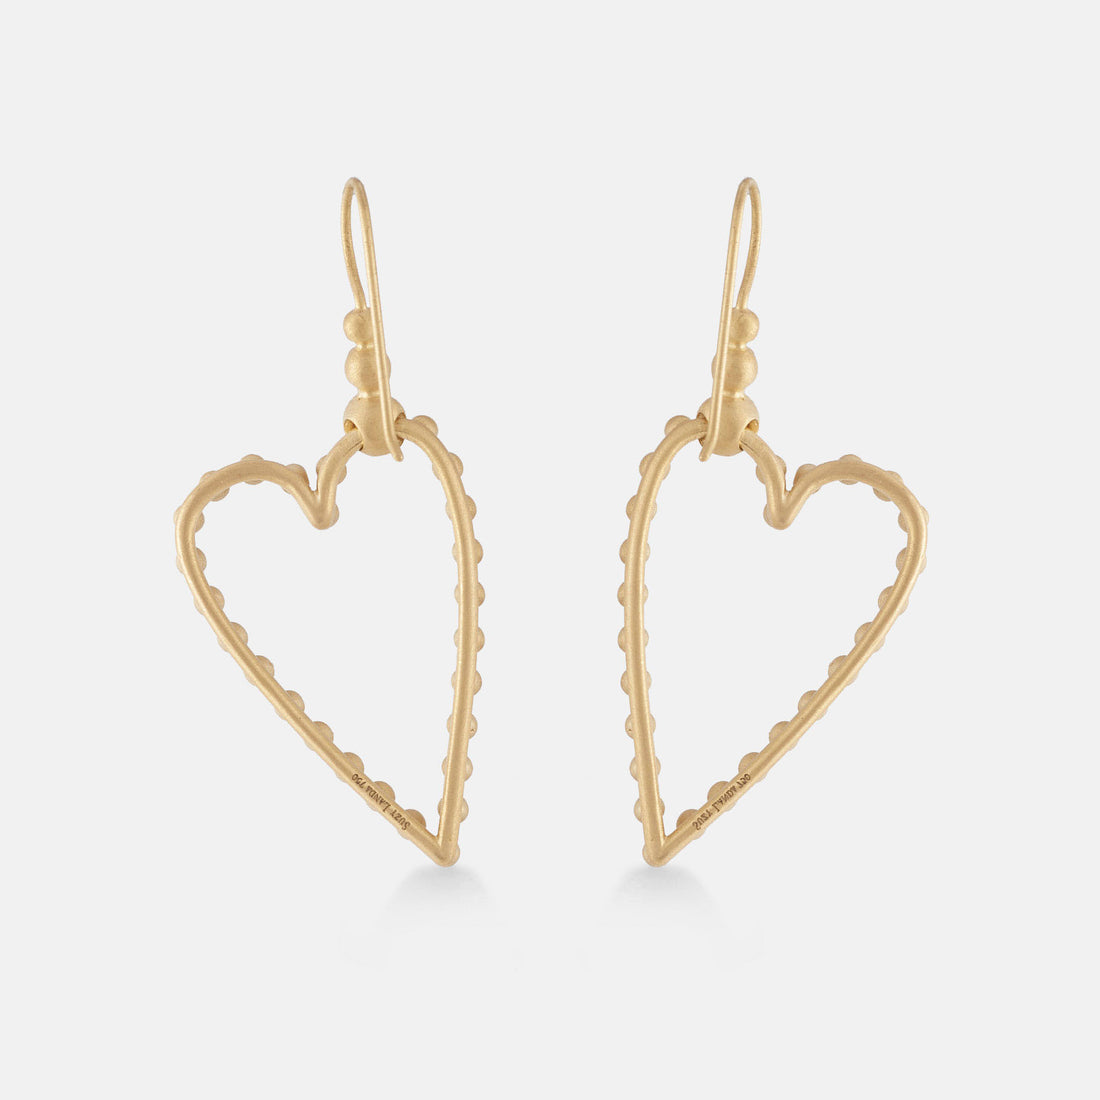 Front facing elongated heart shaped diamond studded earrings